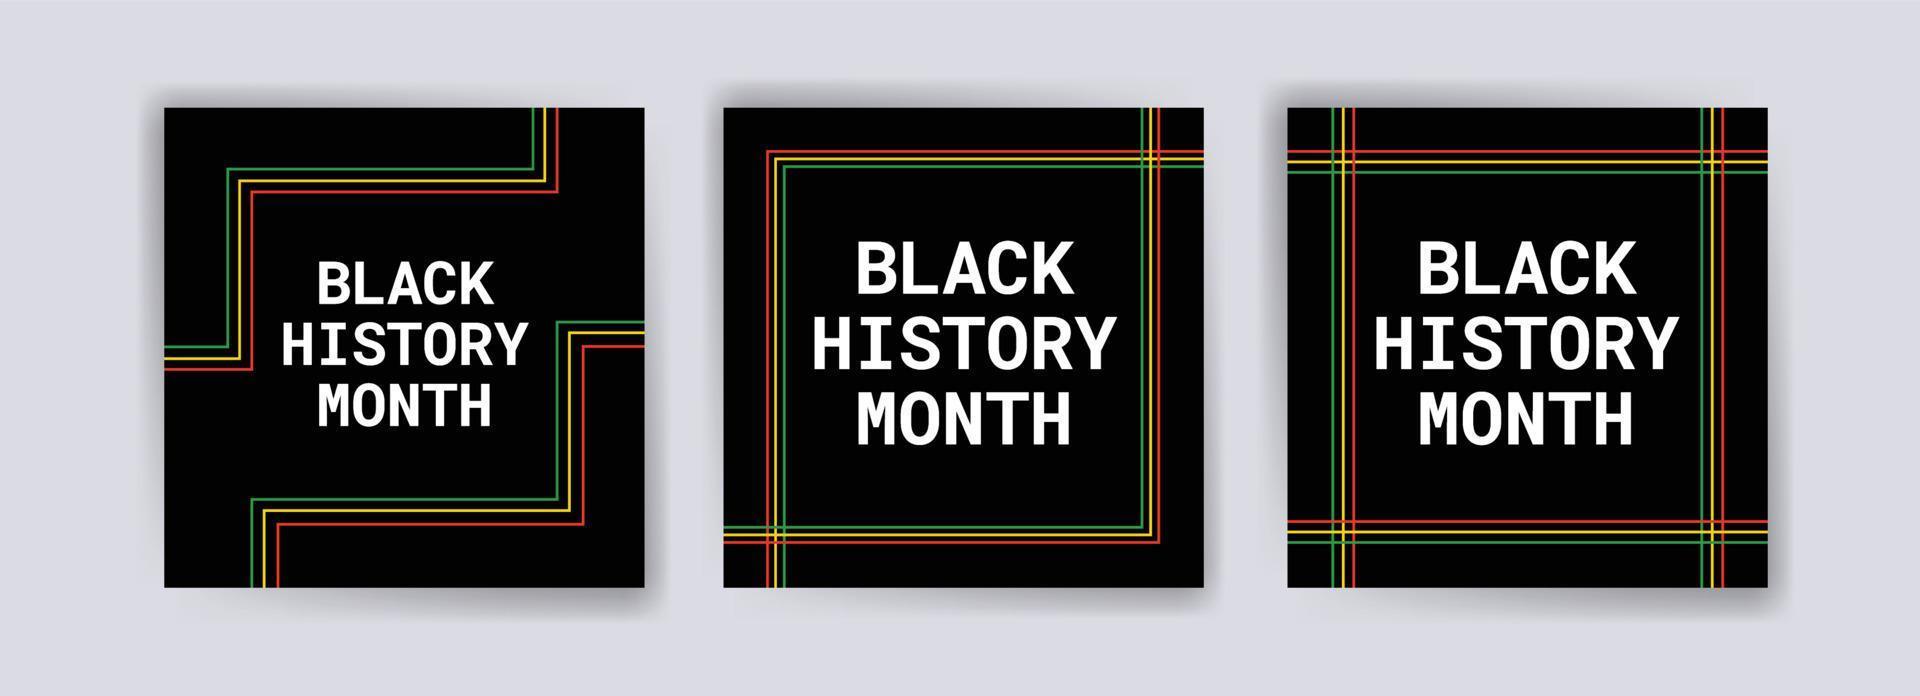 raccolta di post sui social media del mese della storia nera. celebra il mese della storia nera. vettore